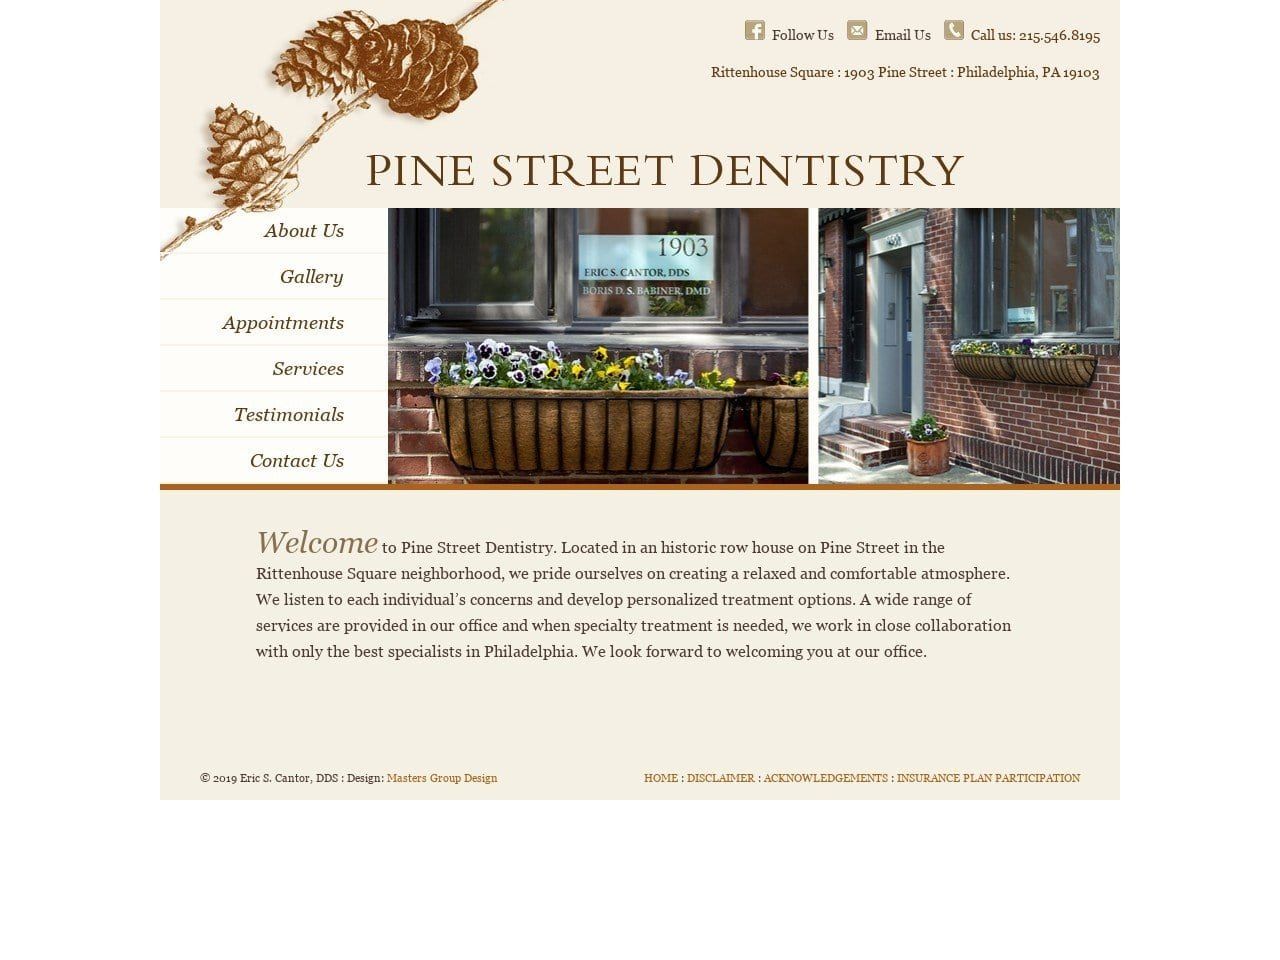 Pine Street Dentistry Website Screenshot from pinestreetdentistry.com